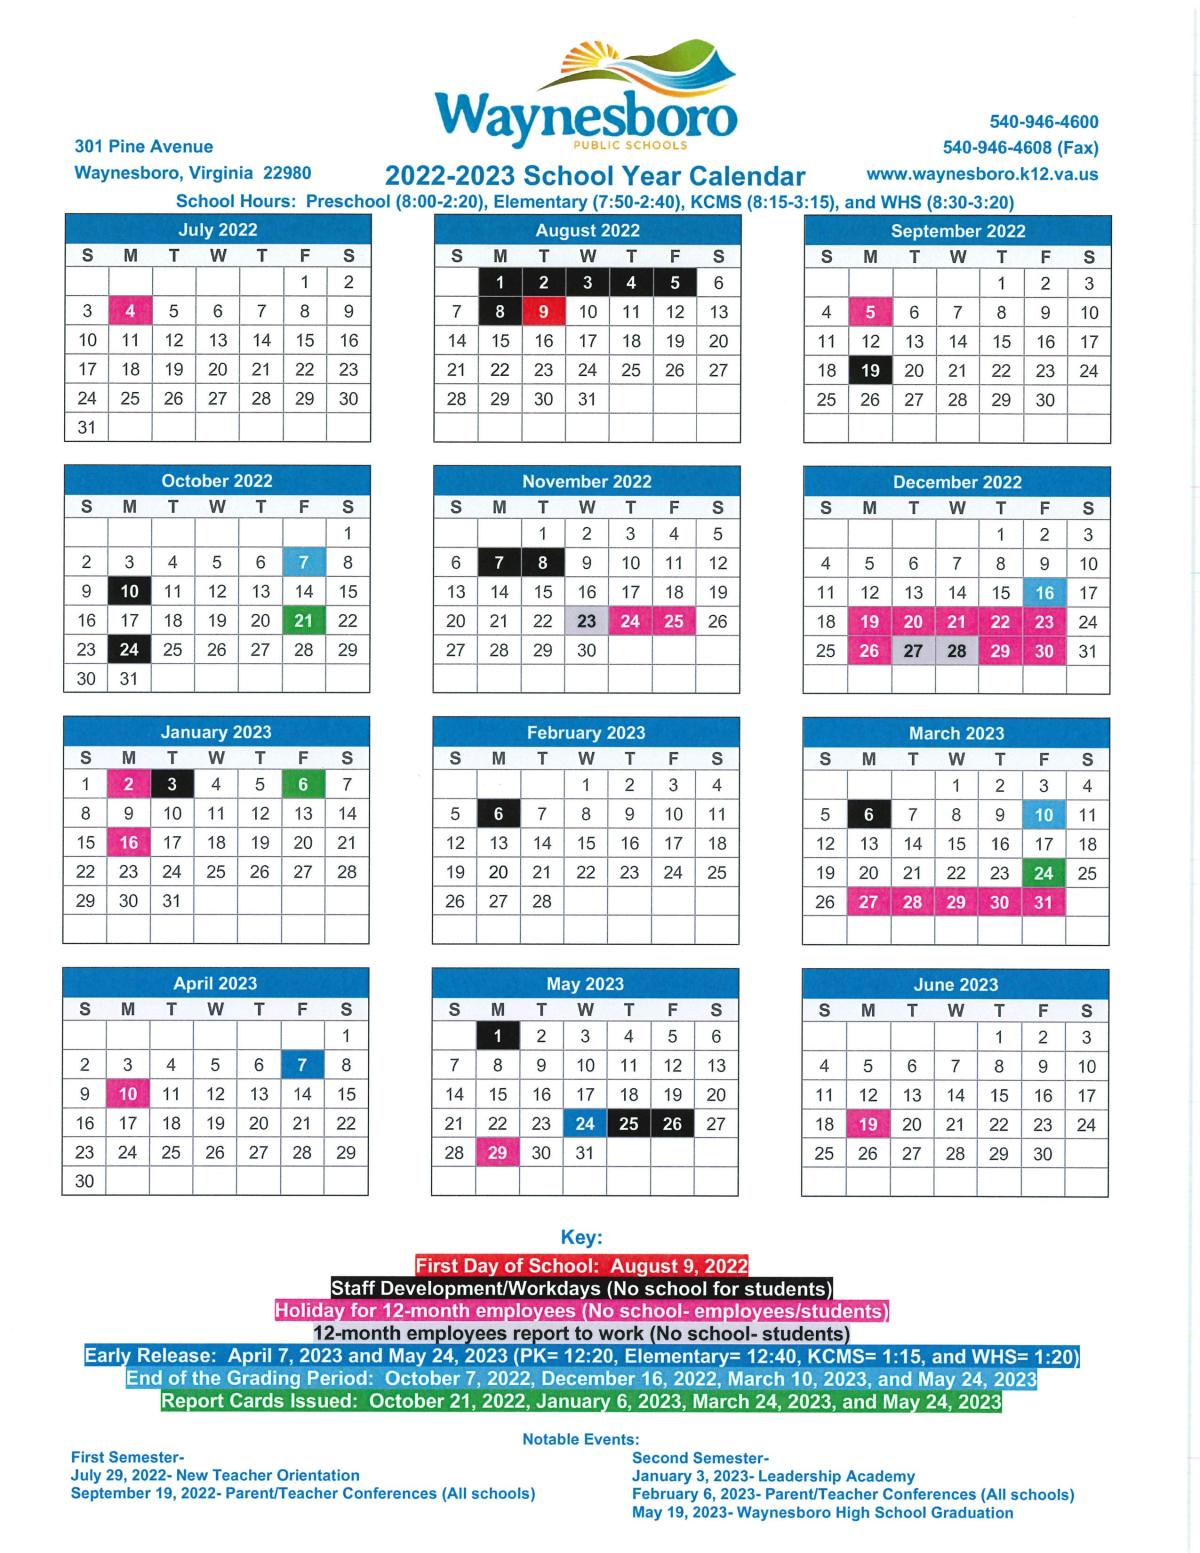 waynesboro-presents-proposed-school-calendar-for-2022-23-changes